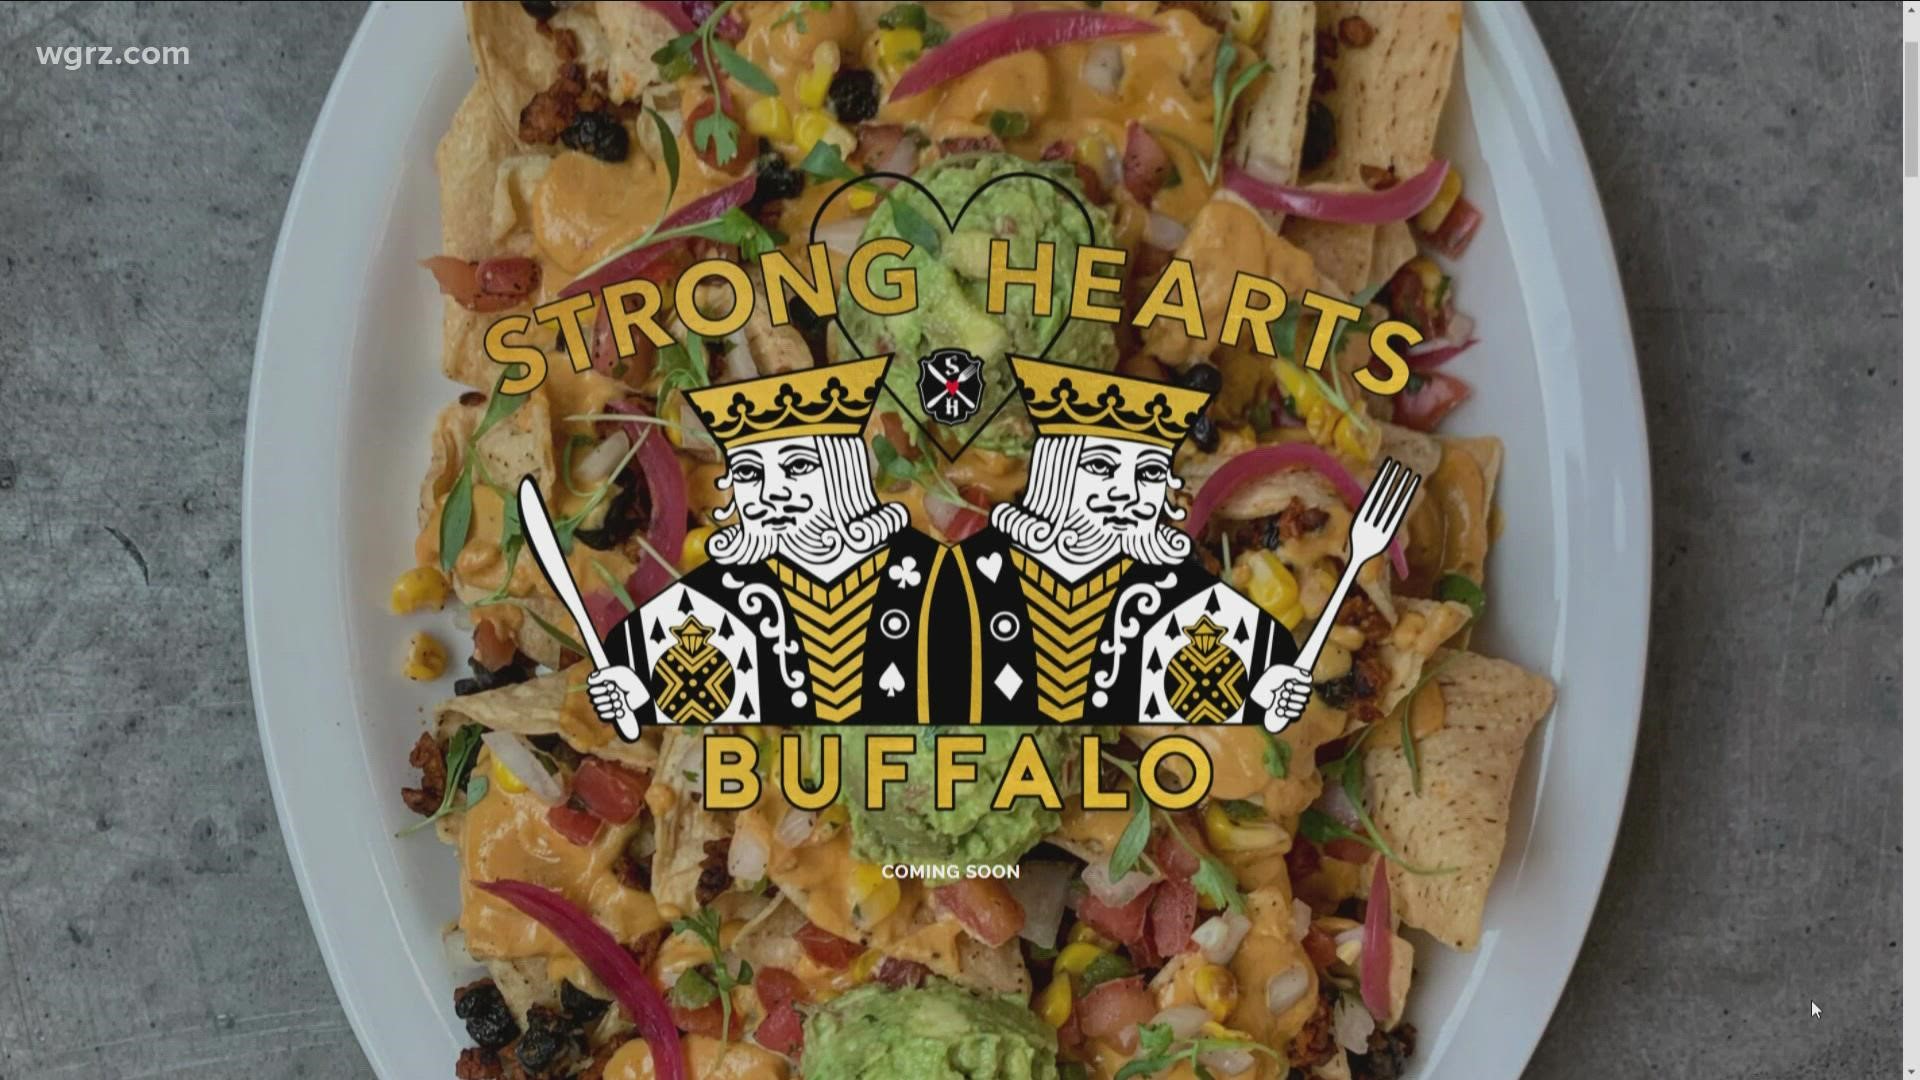 Syracuse-based restaurant is now moving to Buffalo | wgrz.com